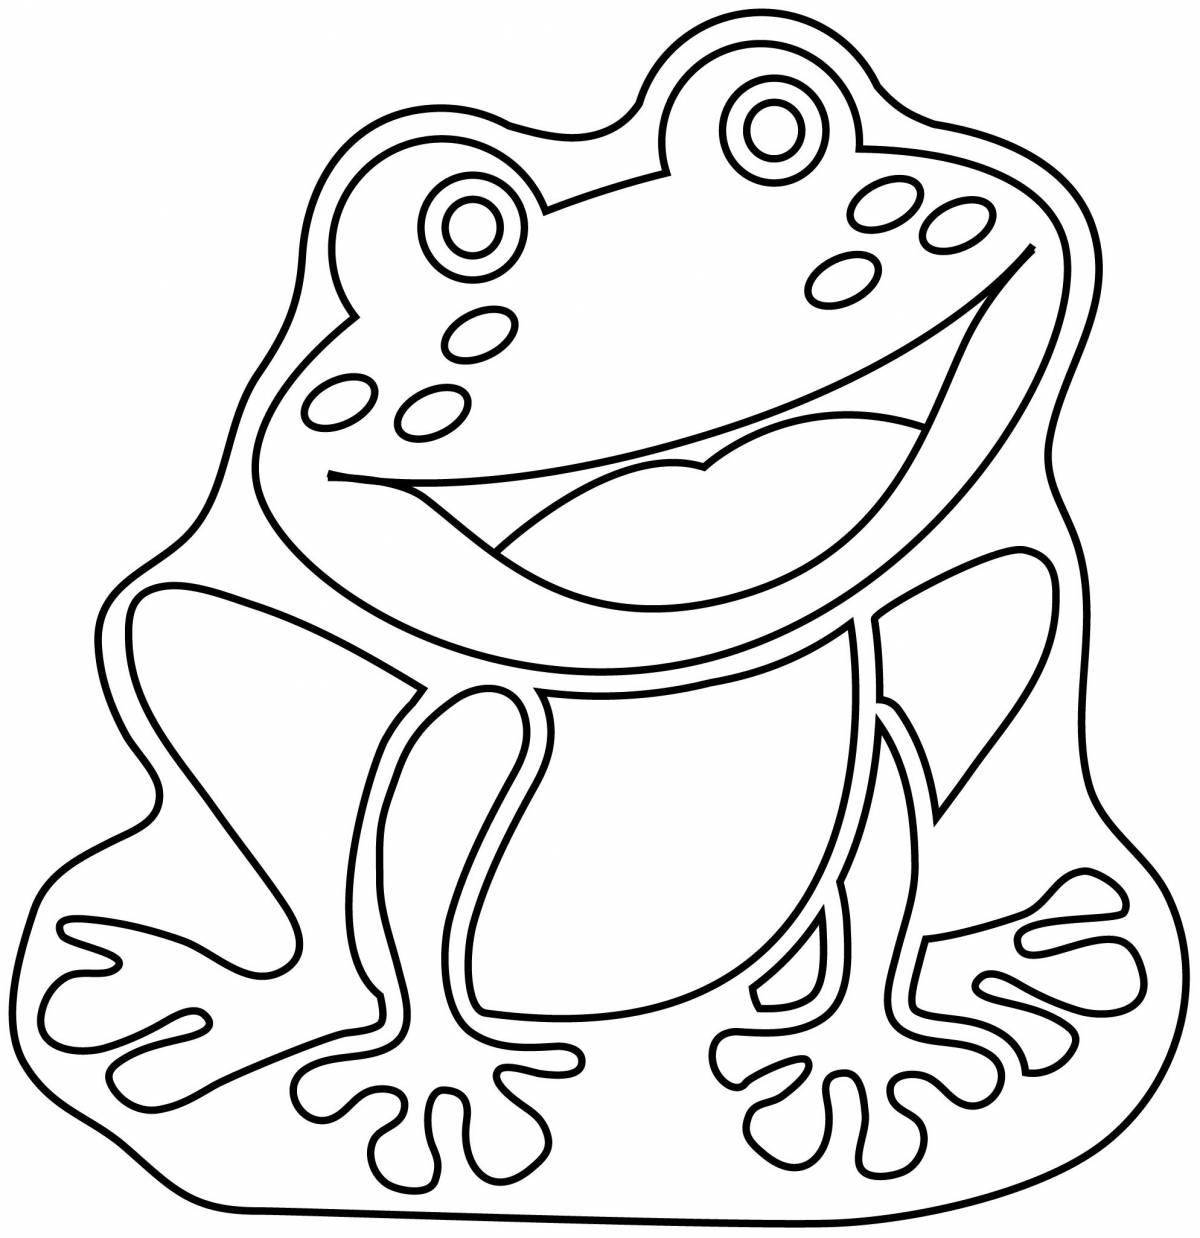 Irresistible coloring frog adopt mi